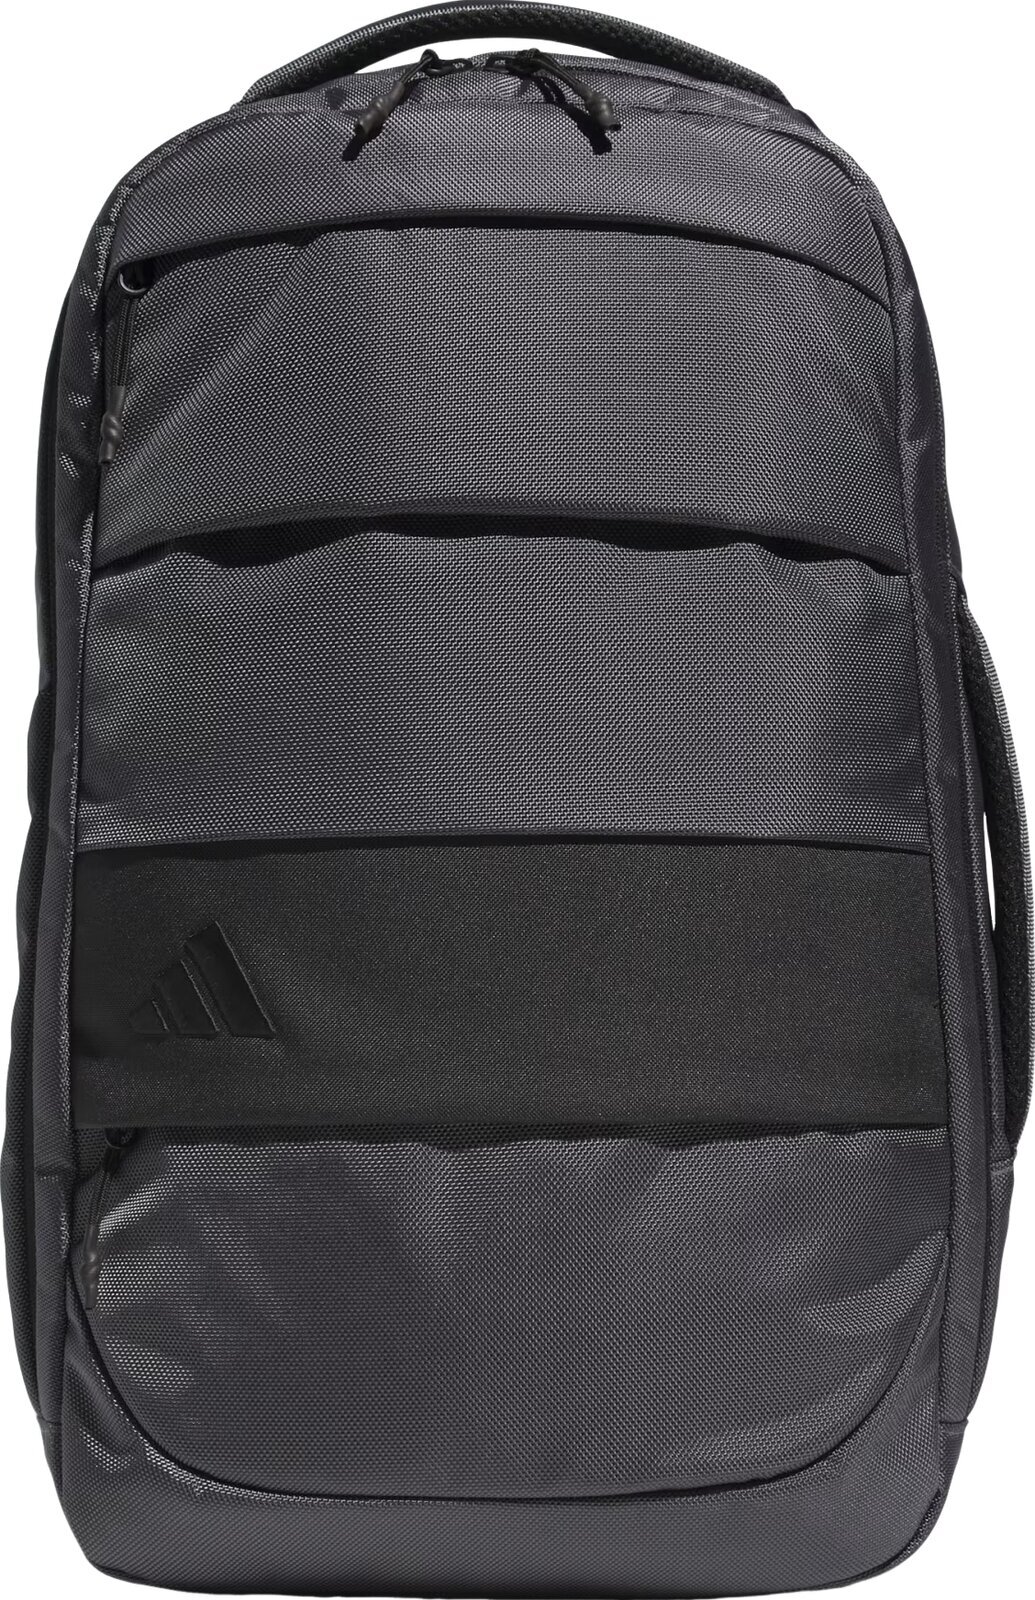 Lifestyle batoh / Taška Adidas Hybrid Backpack Grey 28,20 L Batoh